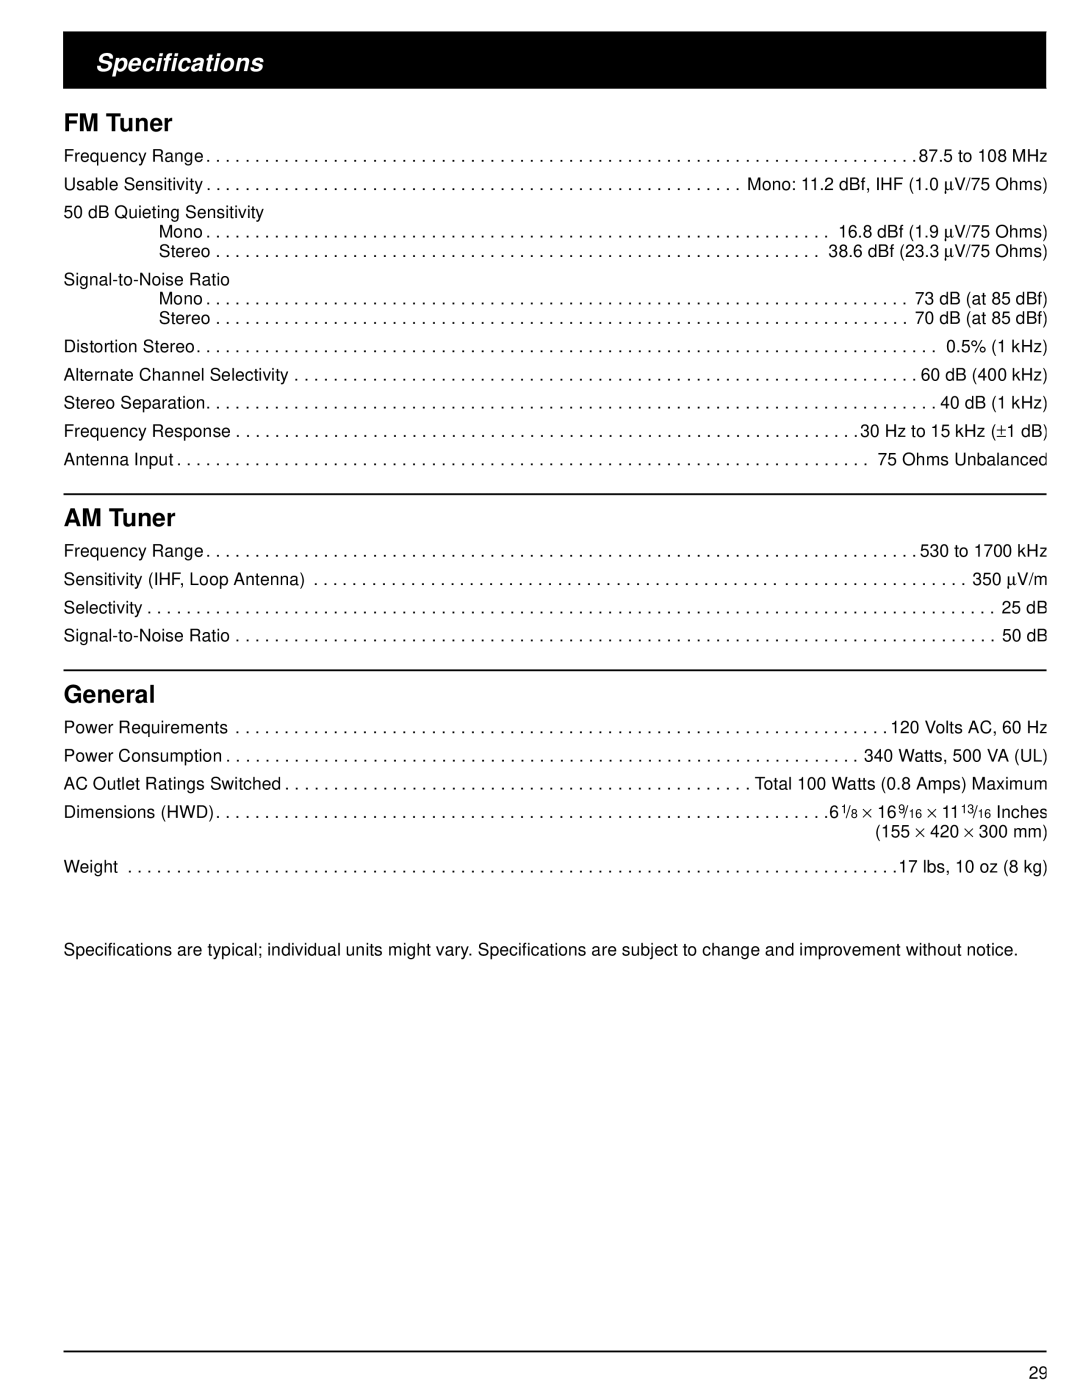 Optimus STAV-3370 owner manual Specifications, FM Tuner, AM Tuner, General 